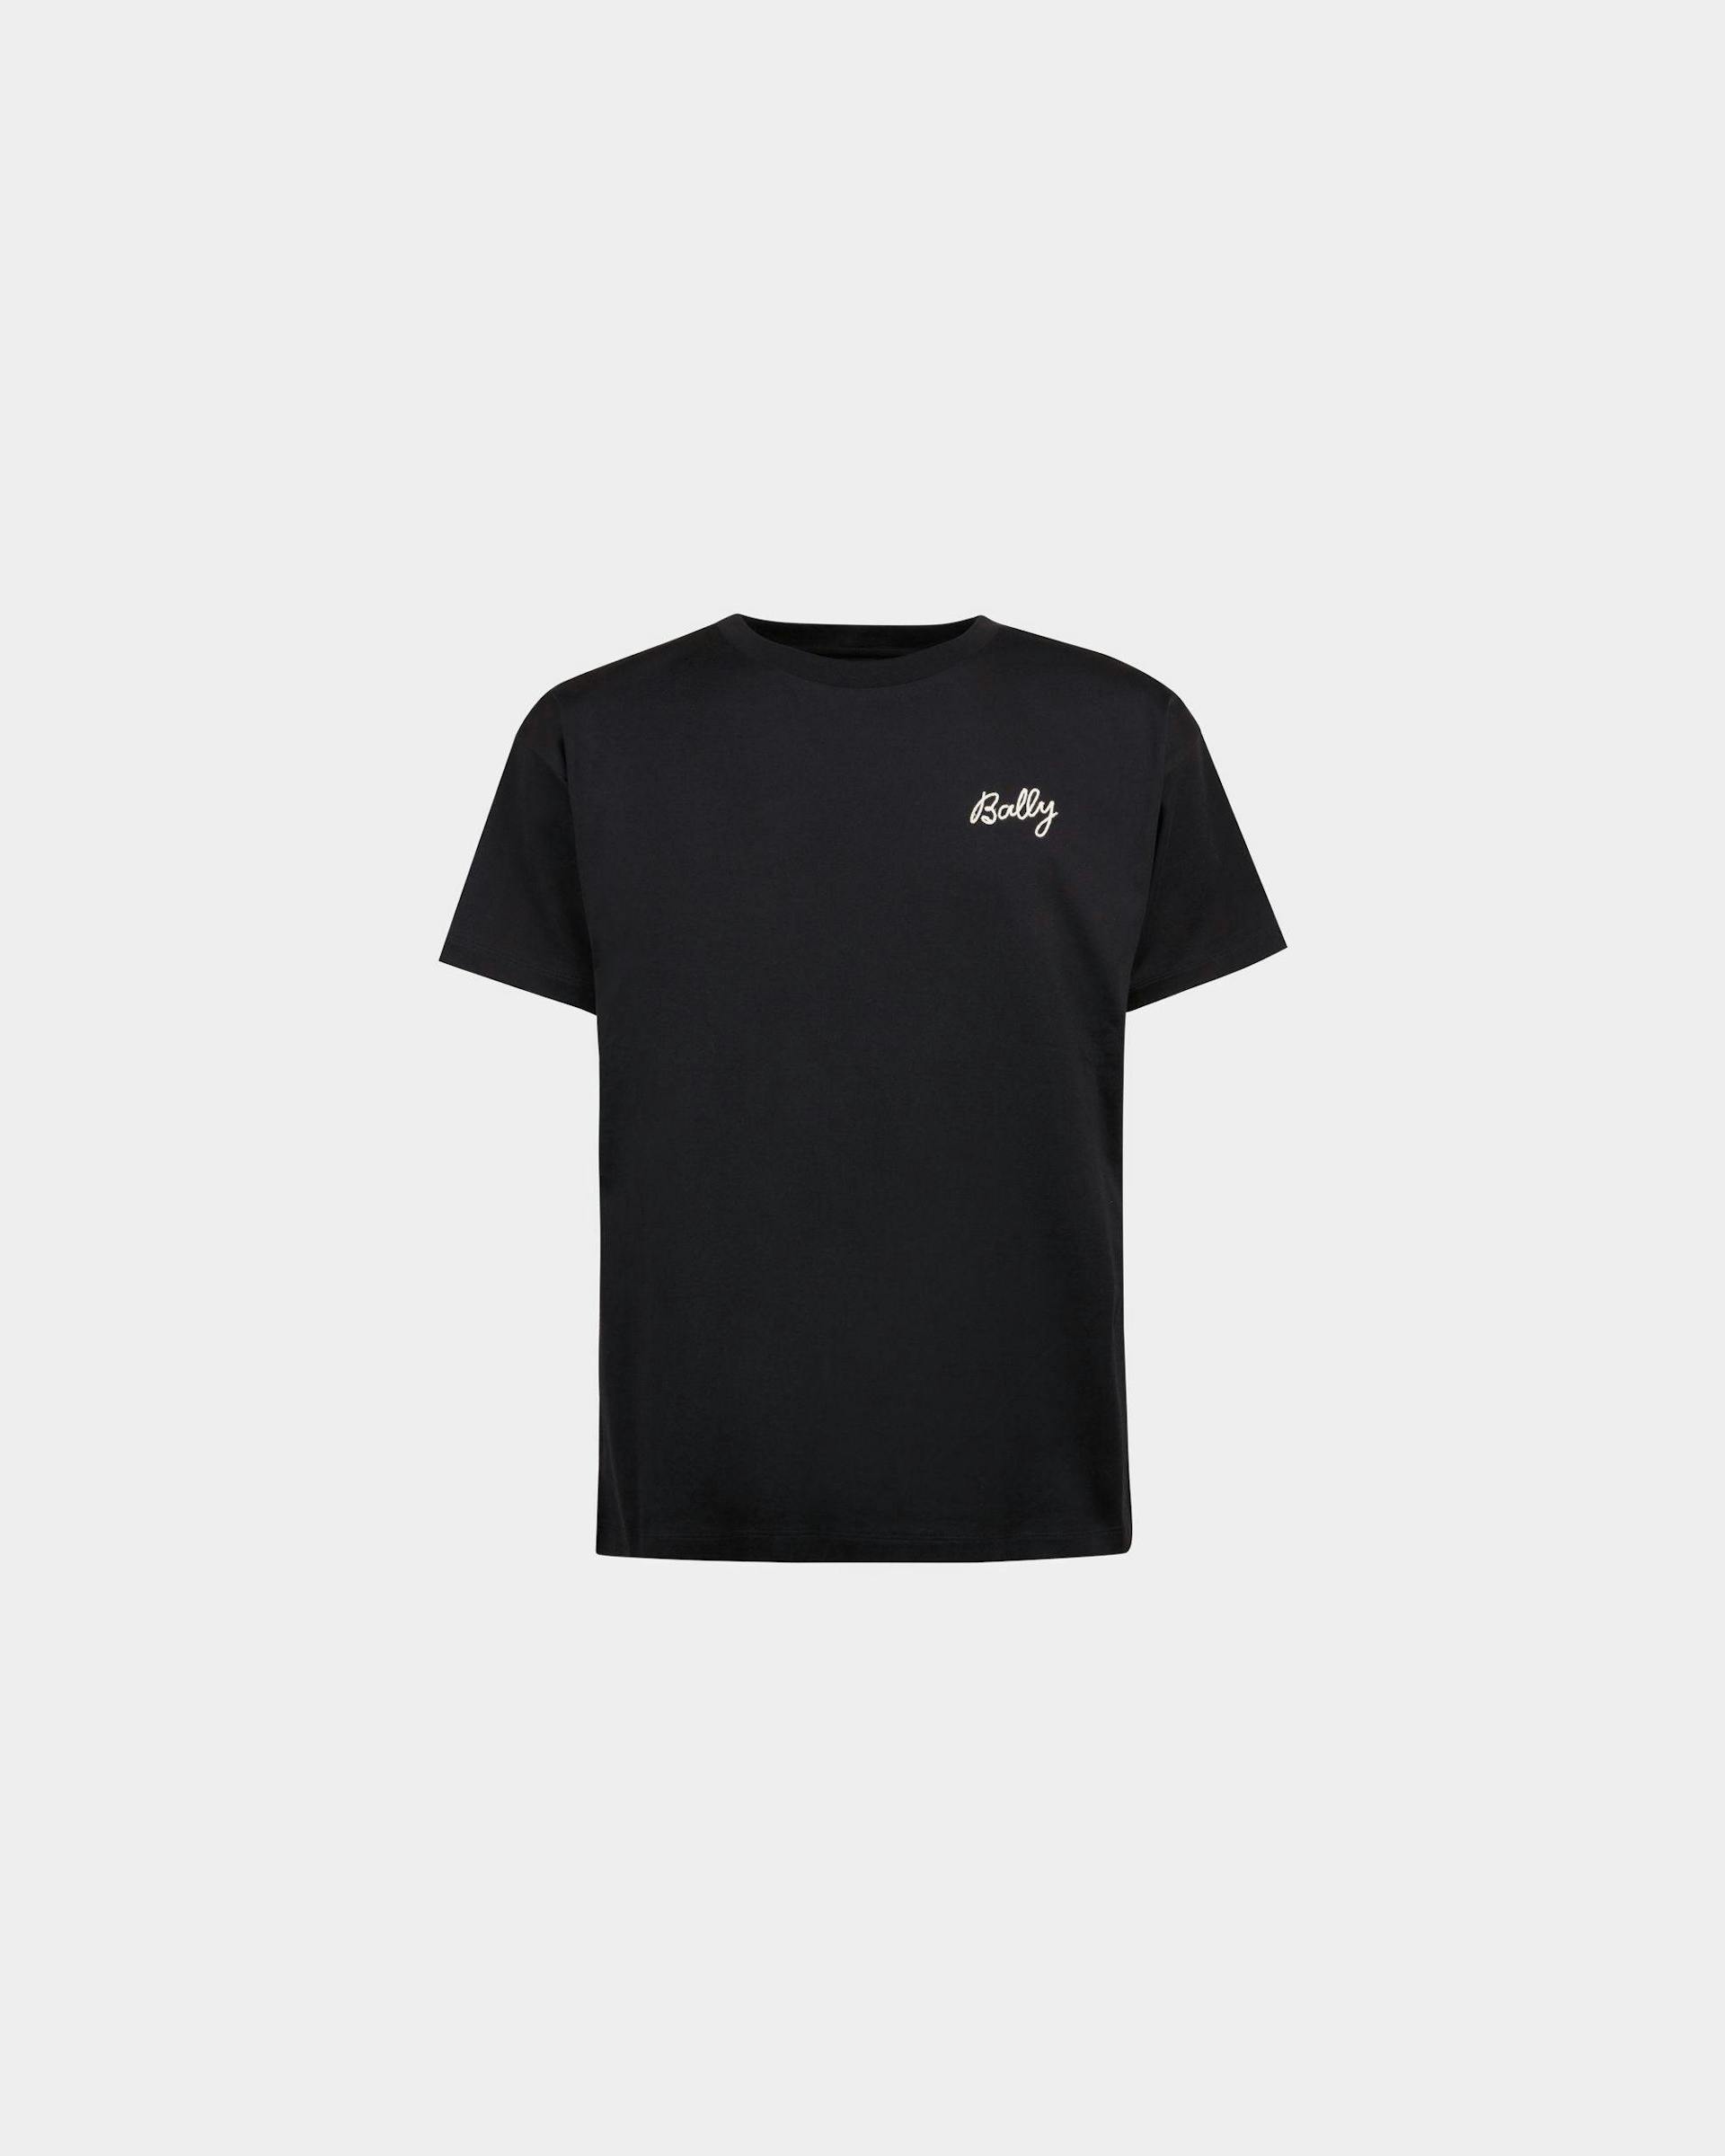 Men's T-Shirt In Black Cotton | Bally | Still Life Front